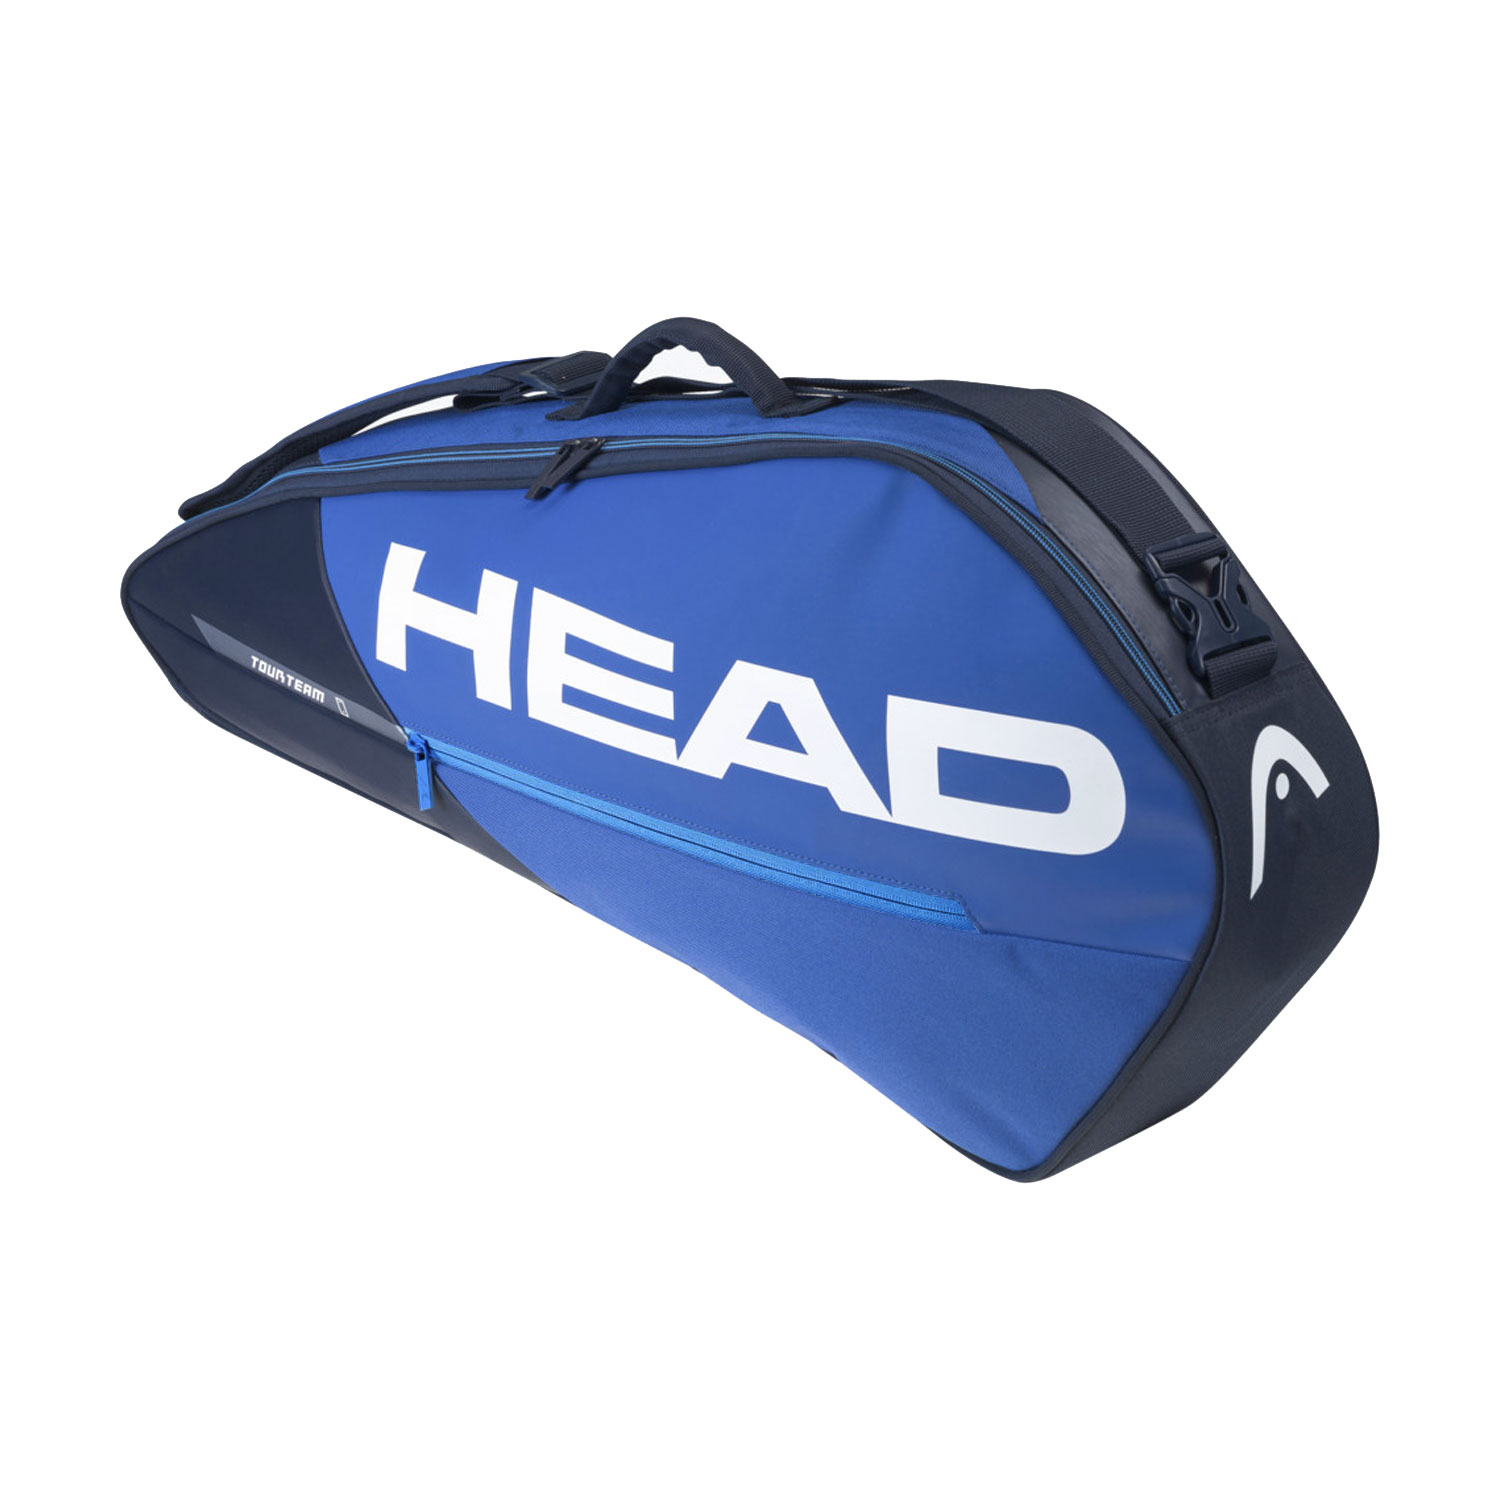 Head Tour Team x 3 Pro Bag - Blue/Navy